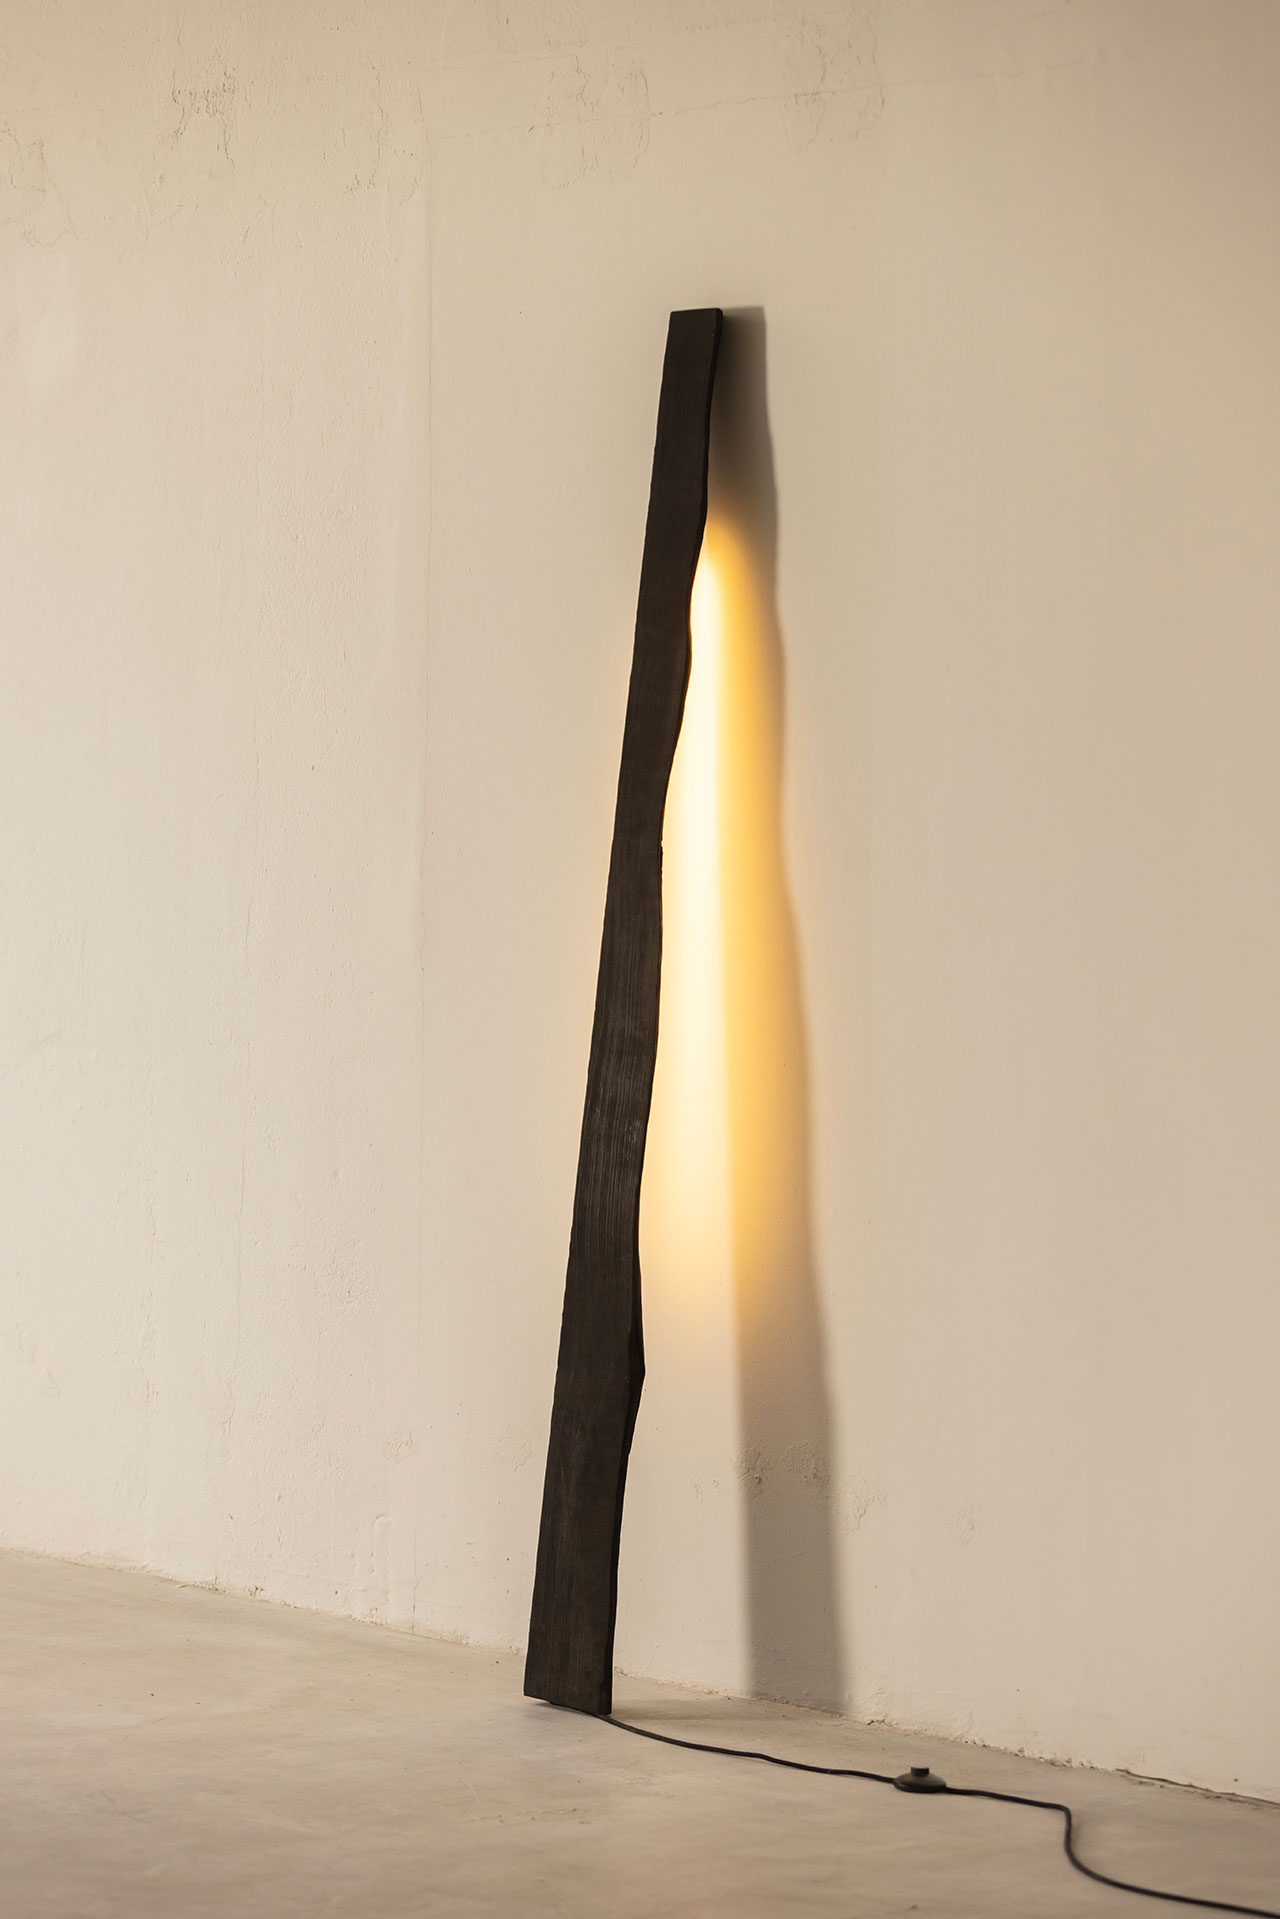 Wall Lamp 04 by Barracão studio (Vasco Fragoso Mendes).
200 x 12 x 4cm.
© Barracao.